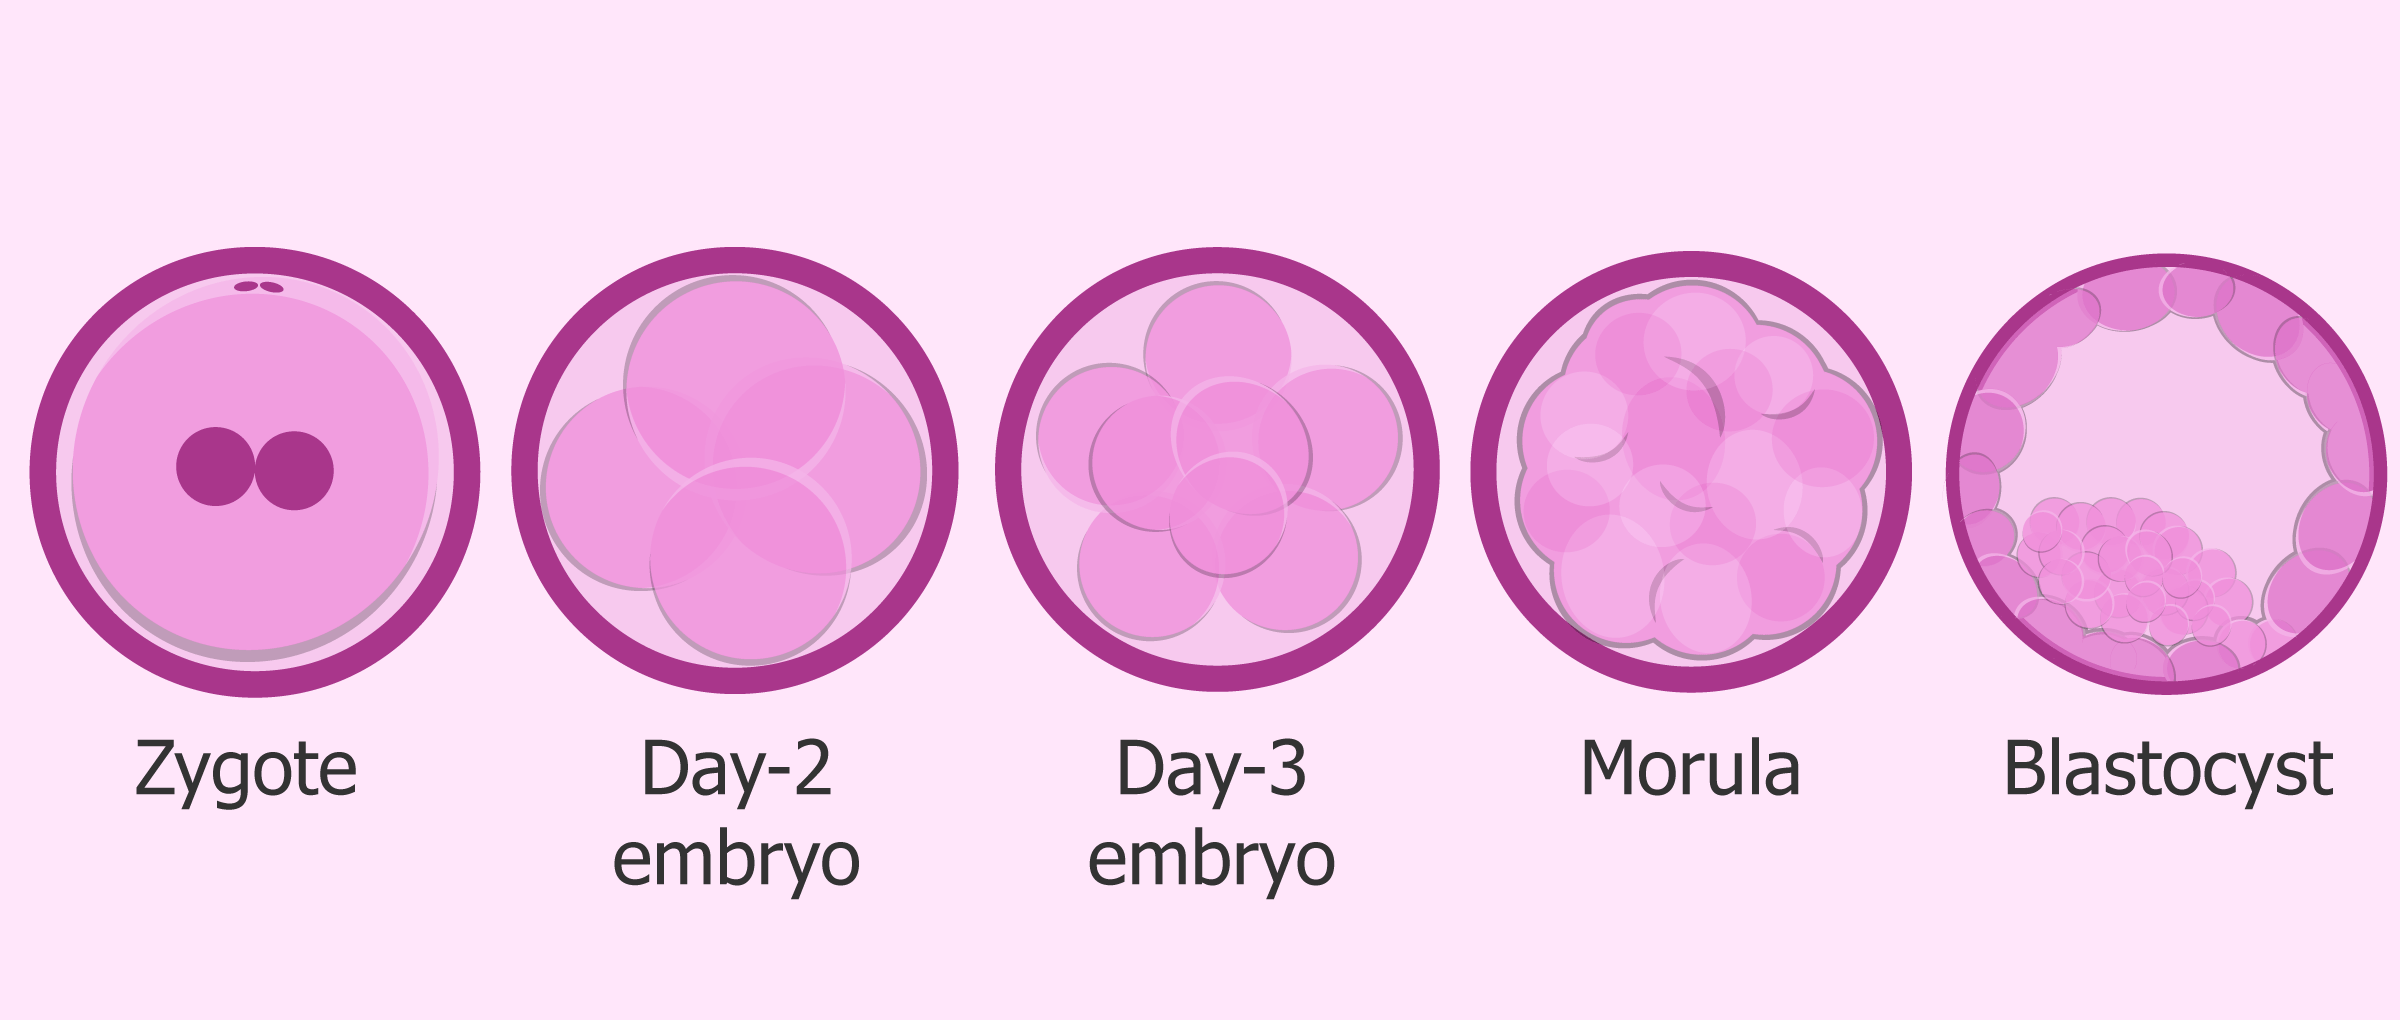 Embryo development from zygote to blastocyst